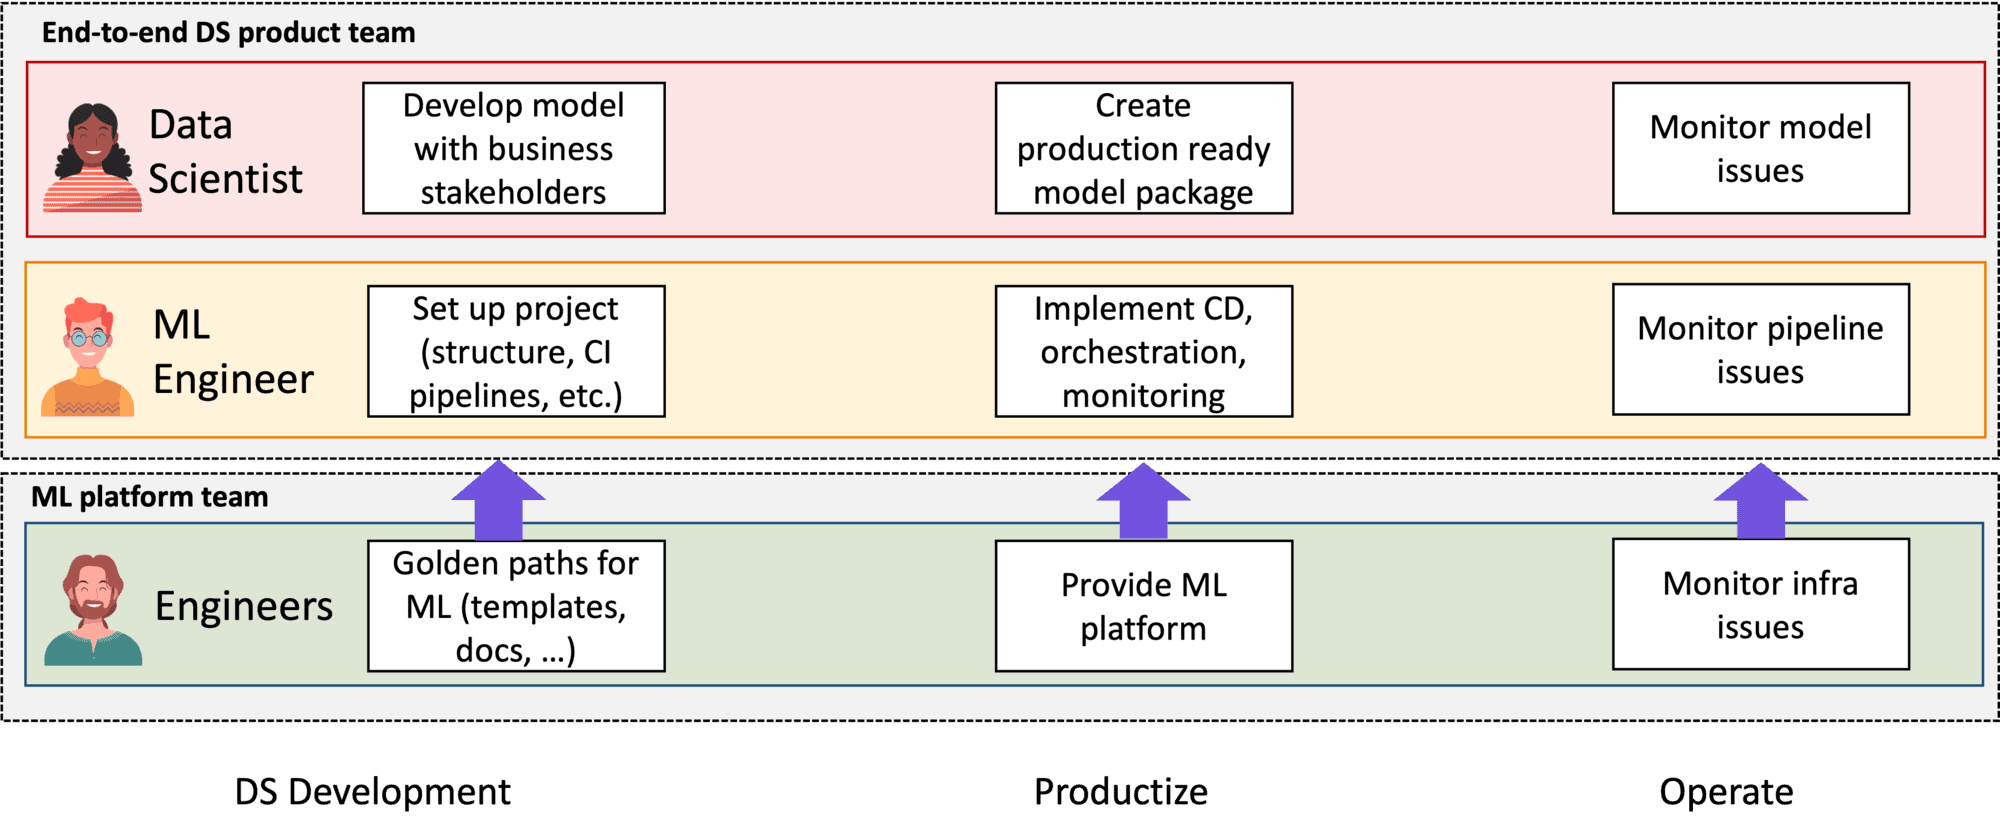 Team structure including platform team